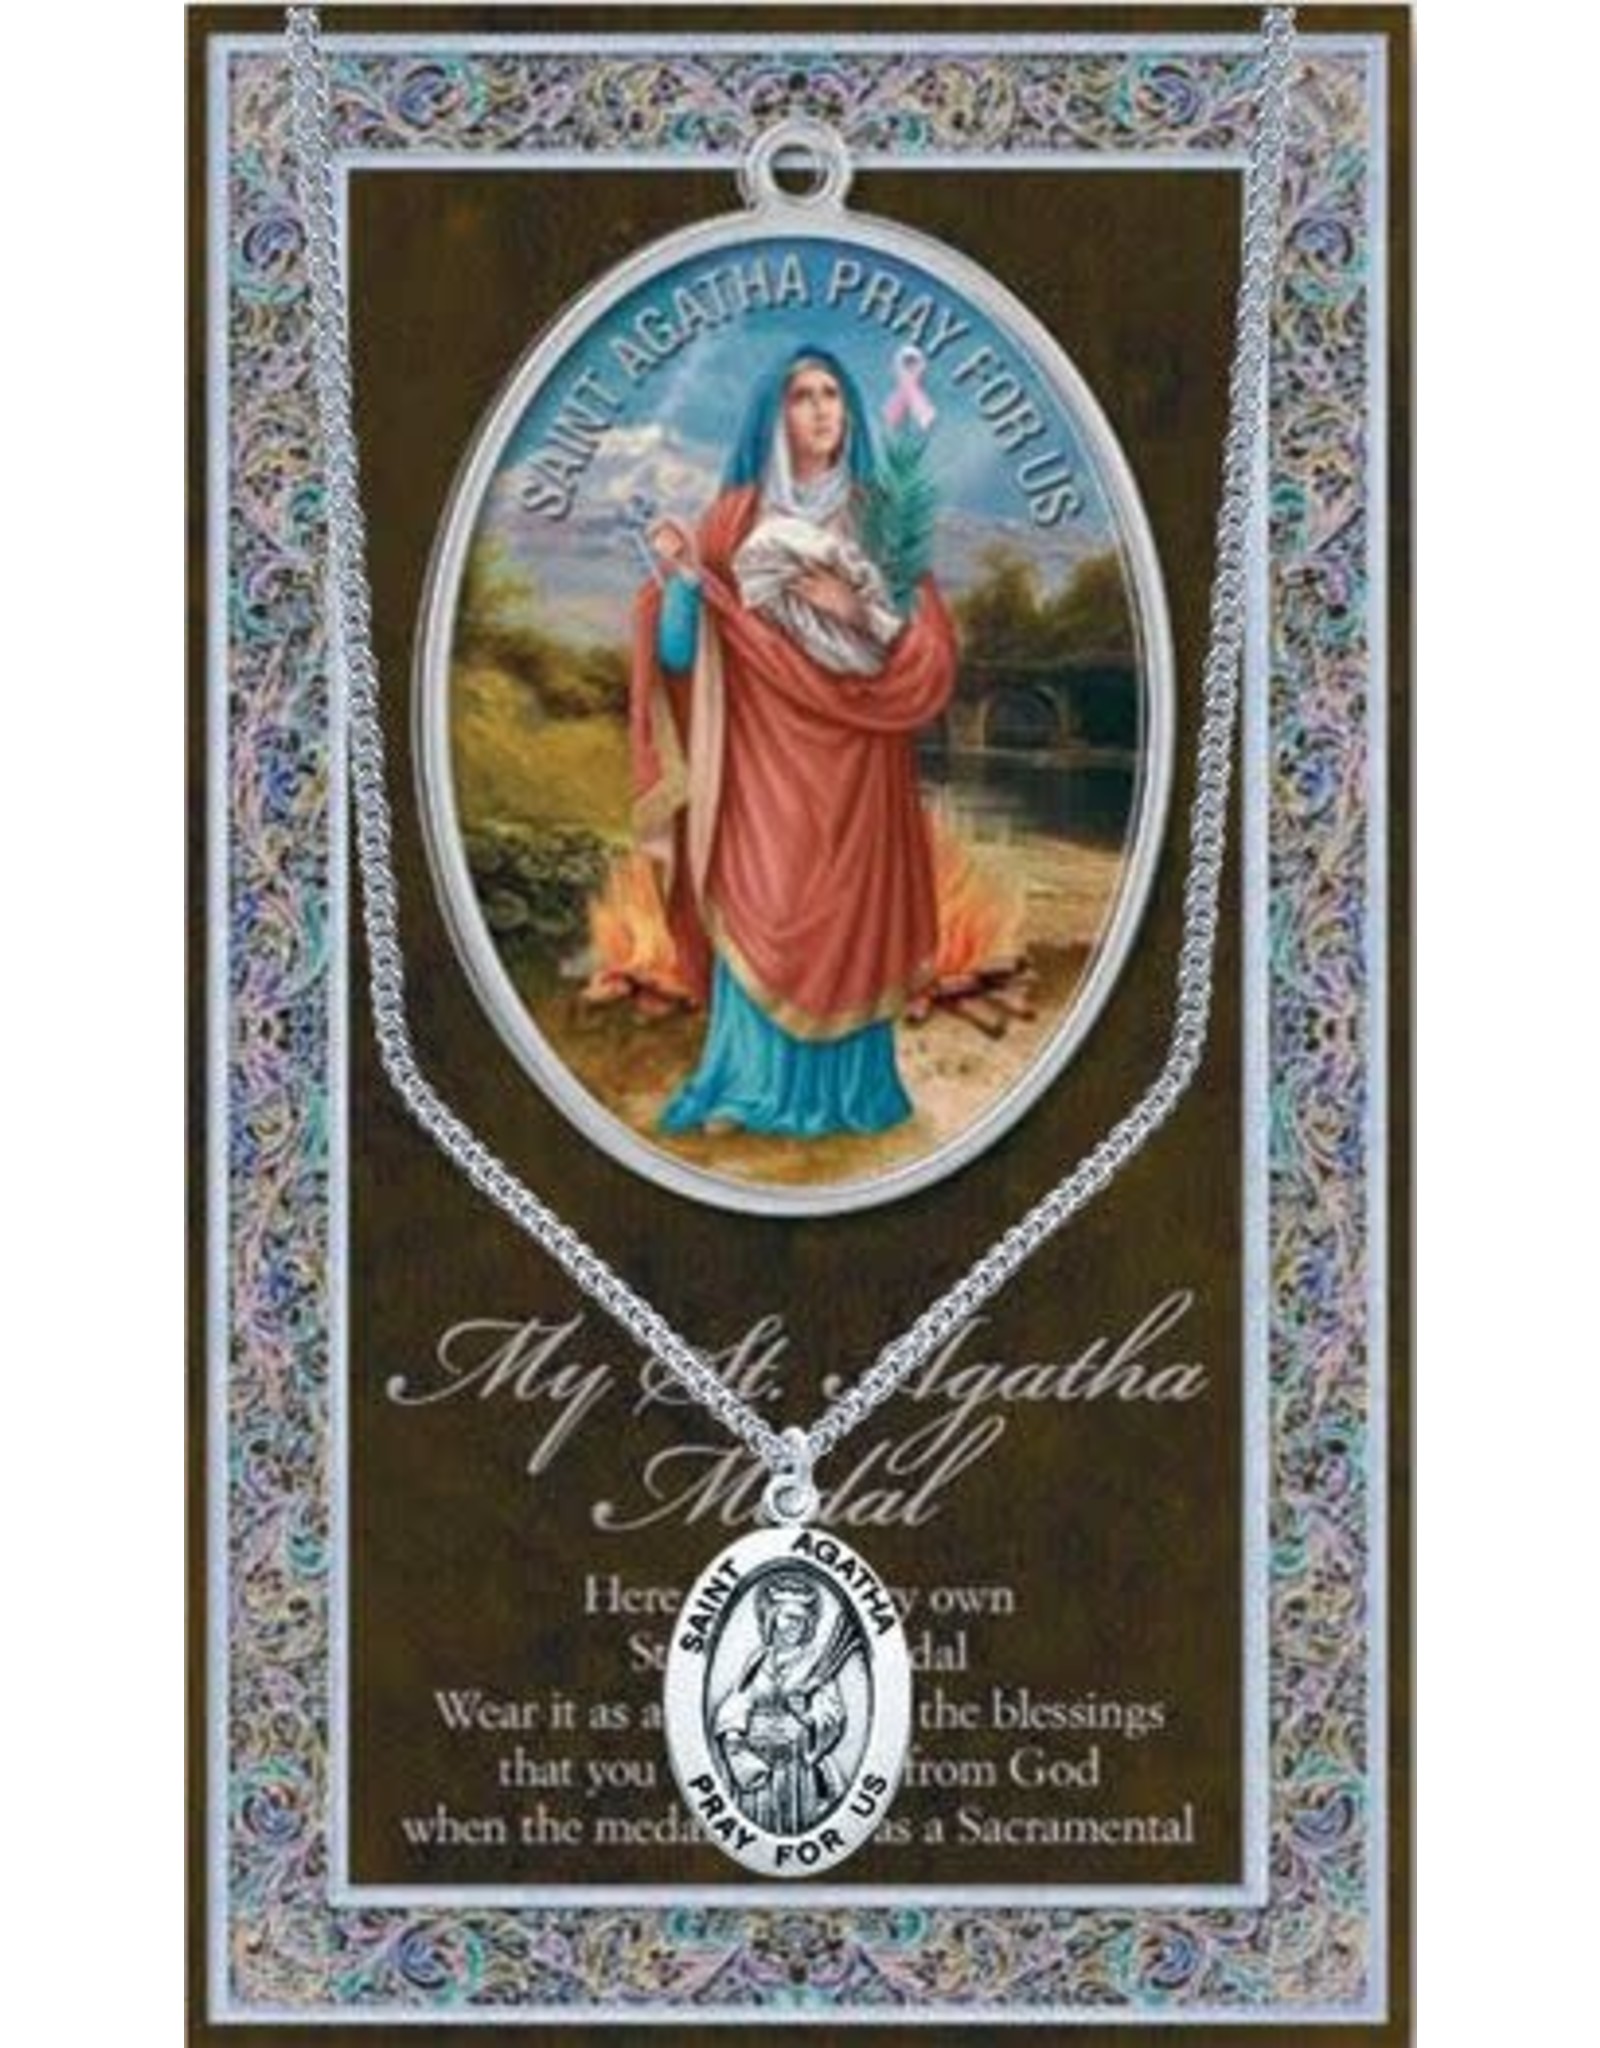 Hirten Saint Medal with Prayer Card - St. Agatha